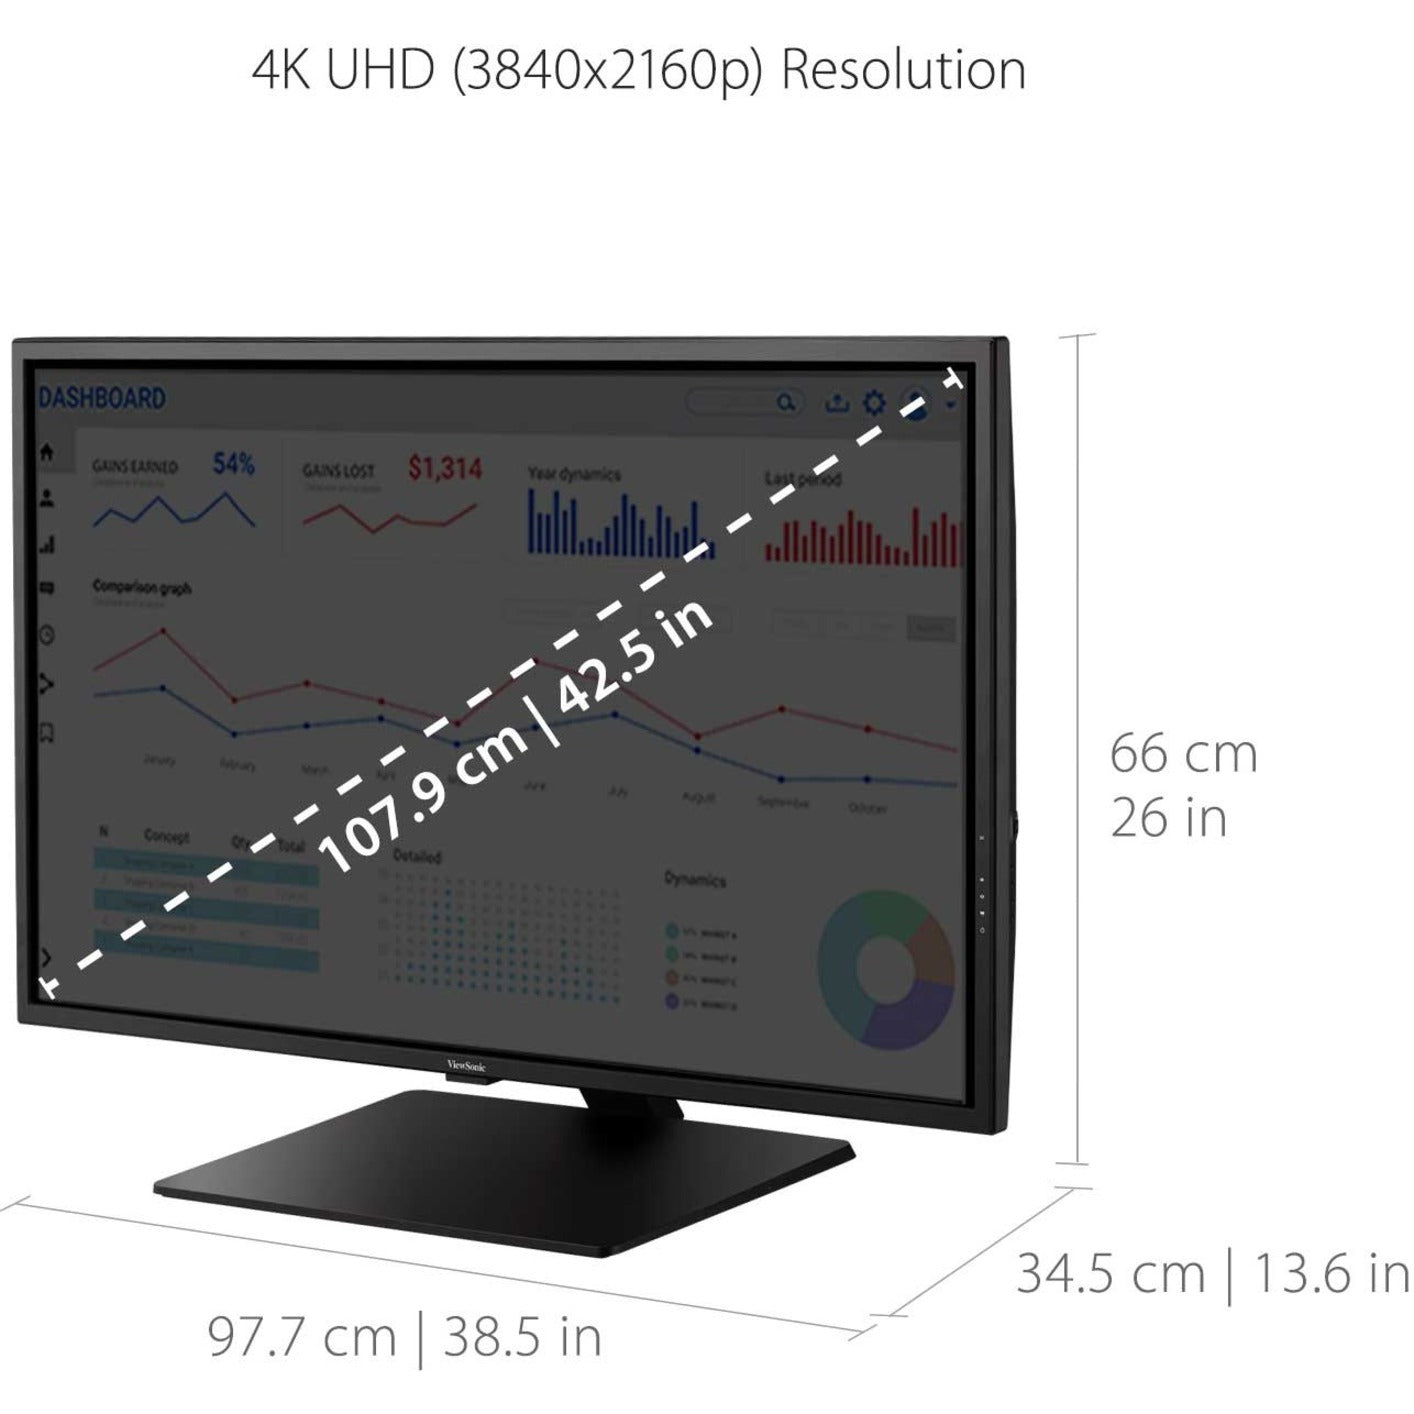 ViewSonic VX4381-4K 43" 4K Ultra HD MVA Monitor, HDMI and DisplayPort, 3840 x 2160 Resolution